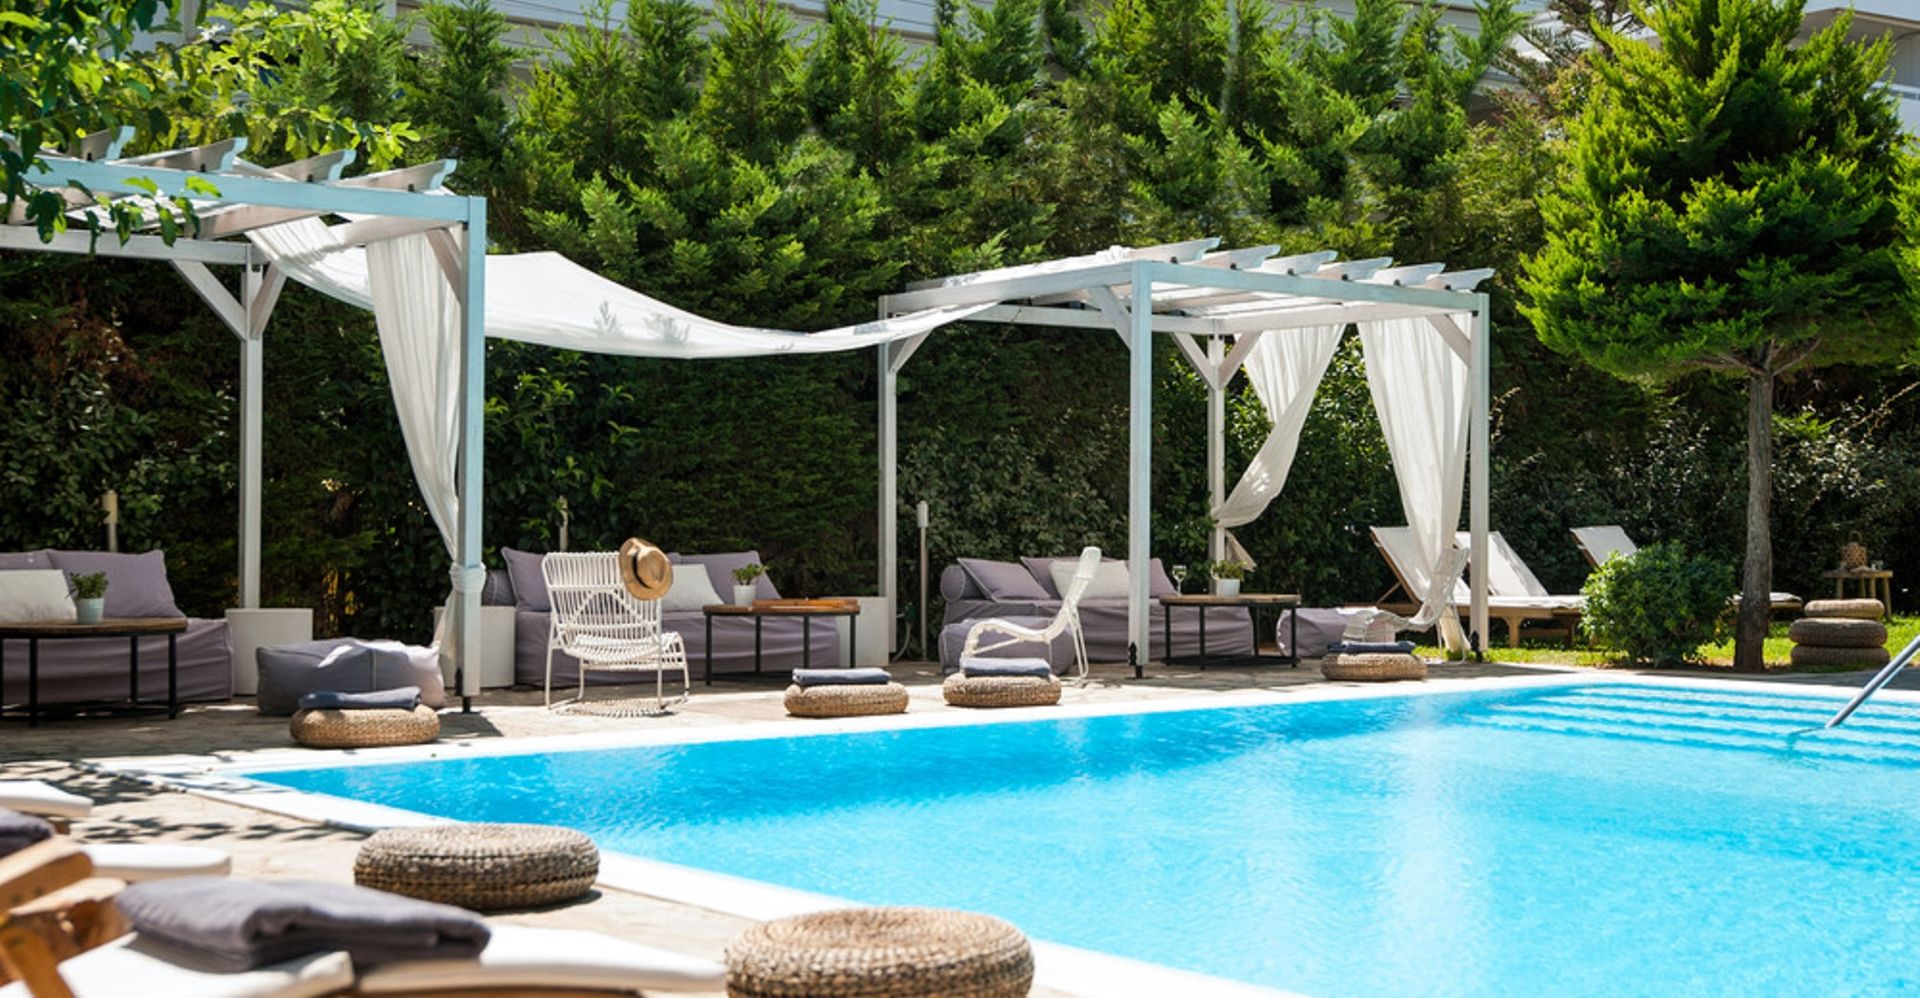 4* Sea View Hotel - Γλυφάδα, Αθήνα ✦ 2 Ημέρες (1 Διανυκτέρευση) ✦ 2 άτομα ✦ Πρωινό ✦ 01/06/2020 έως 30/09/2020 ✦ Free Wi-Fi